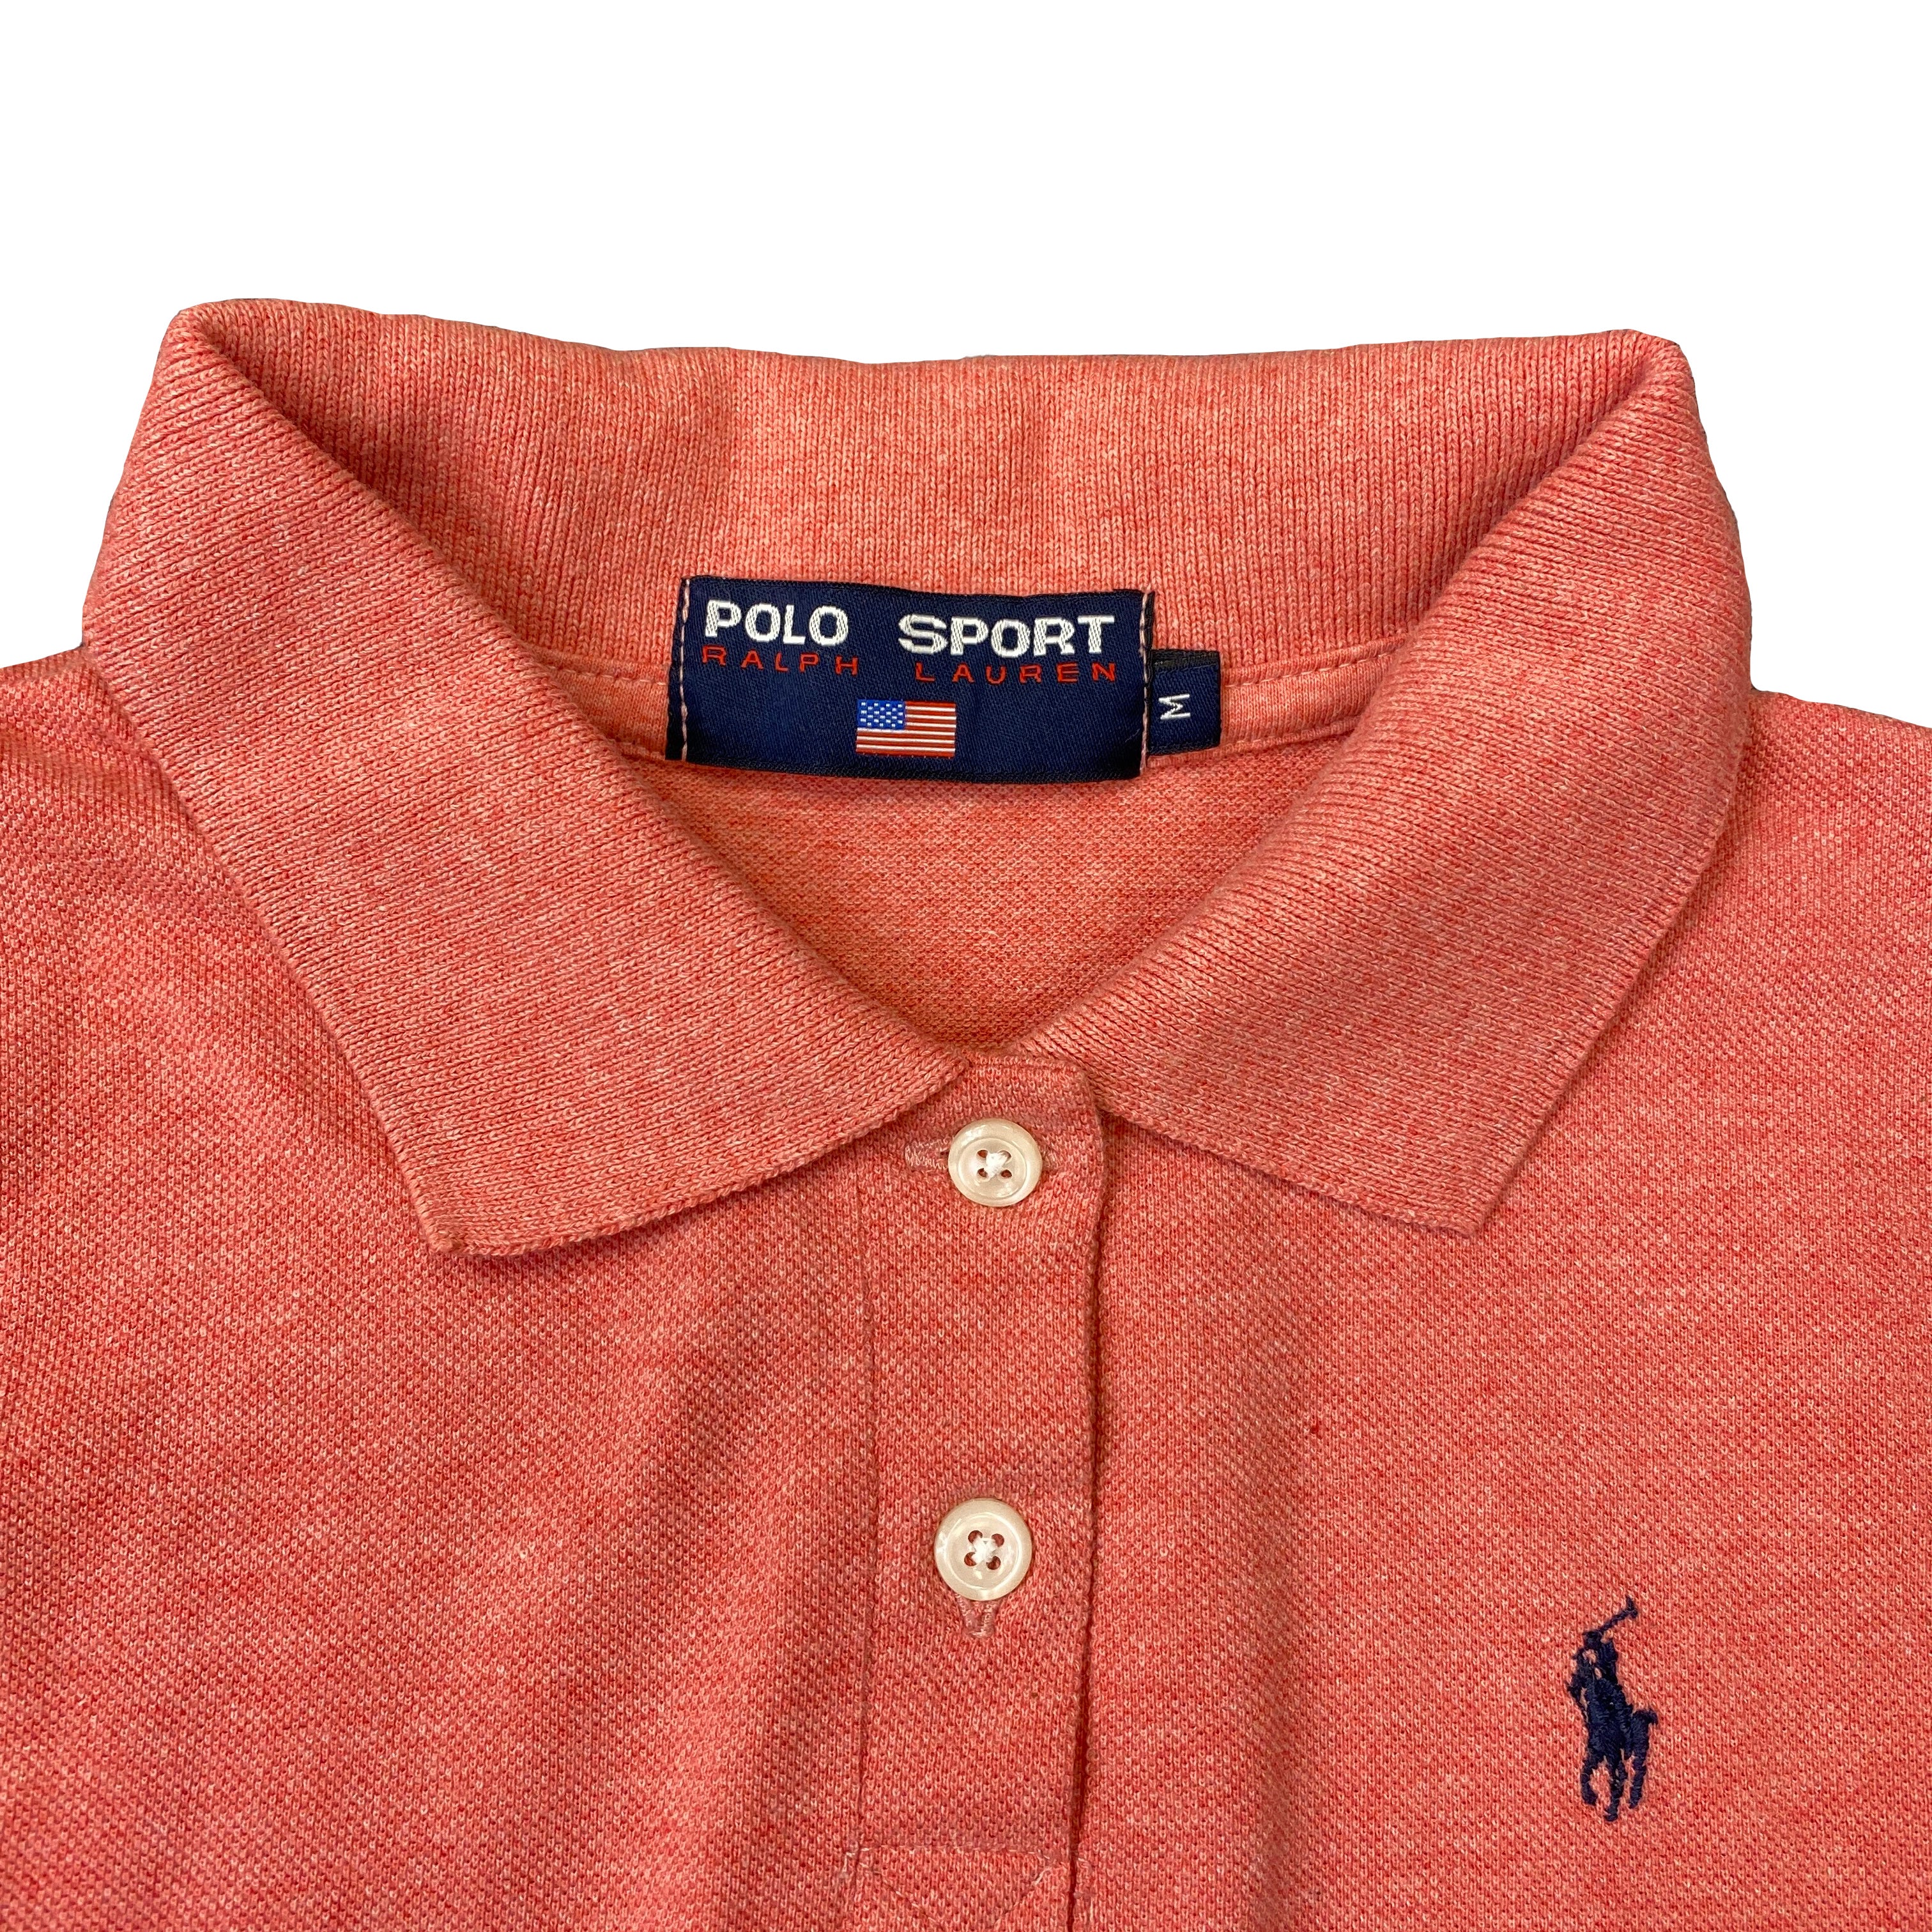 Ralph Lauren Coral Polo Shirt